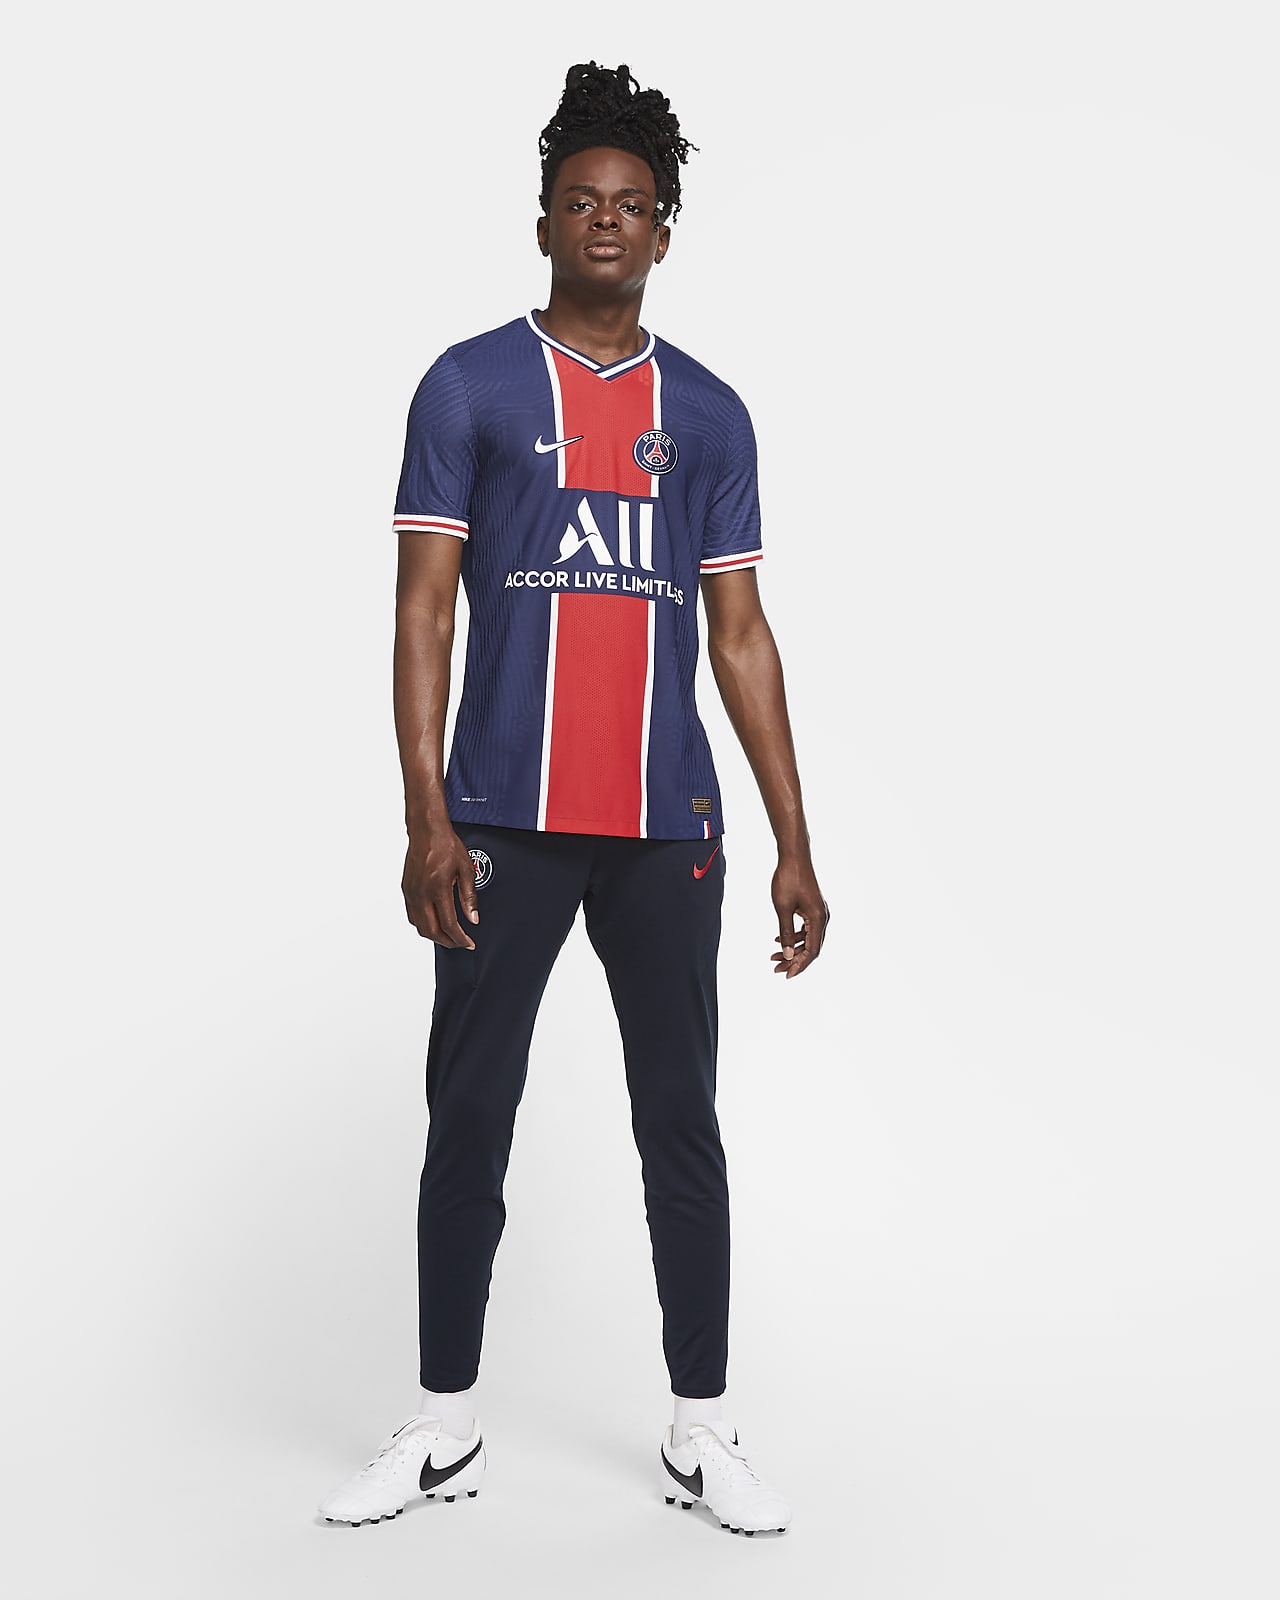 Nike公式 パリ サンジェルマン 21 ヴェイパー マッチ ホーム メンズ サッカーユニフォーム オンラインストア 通販サイト